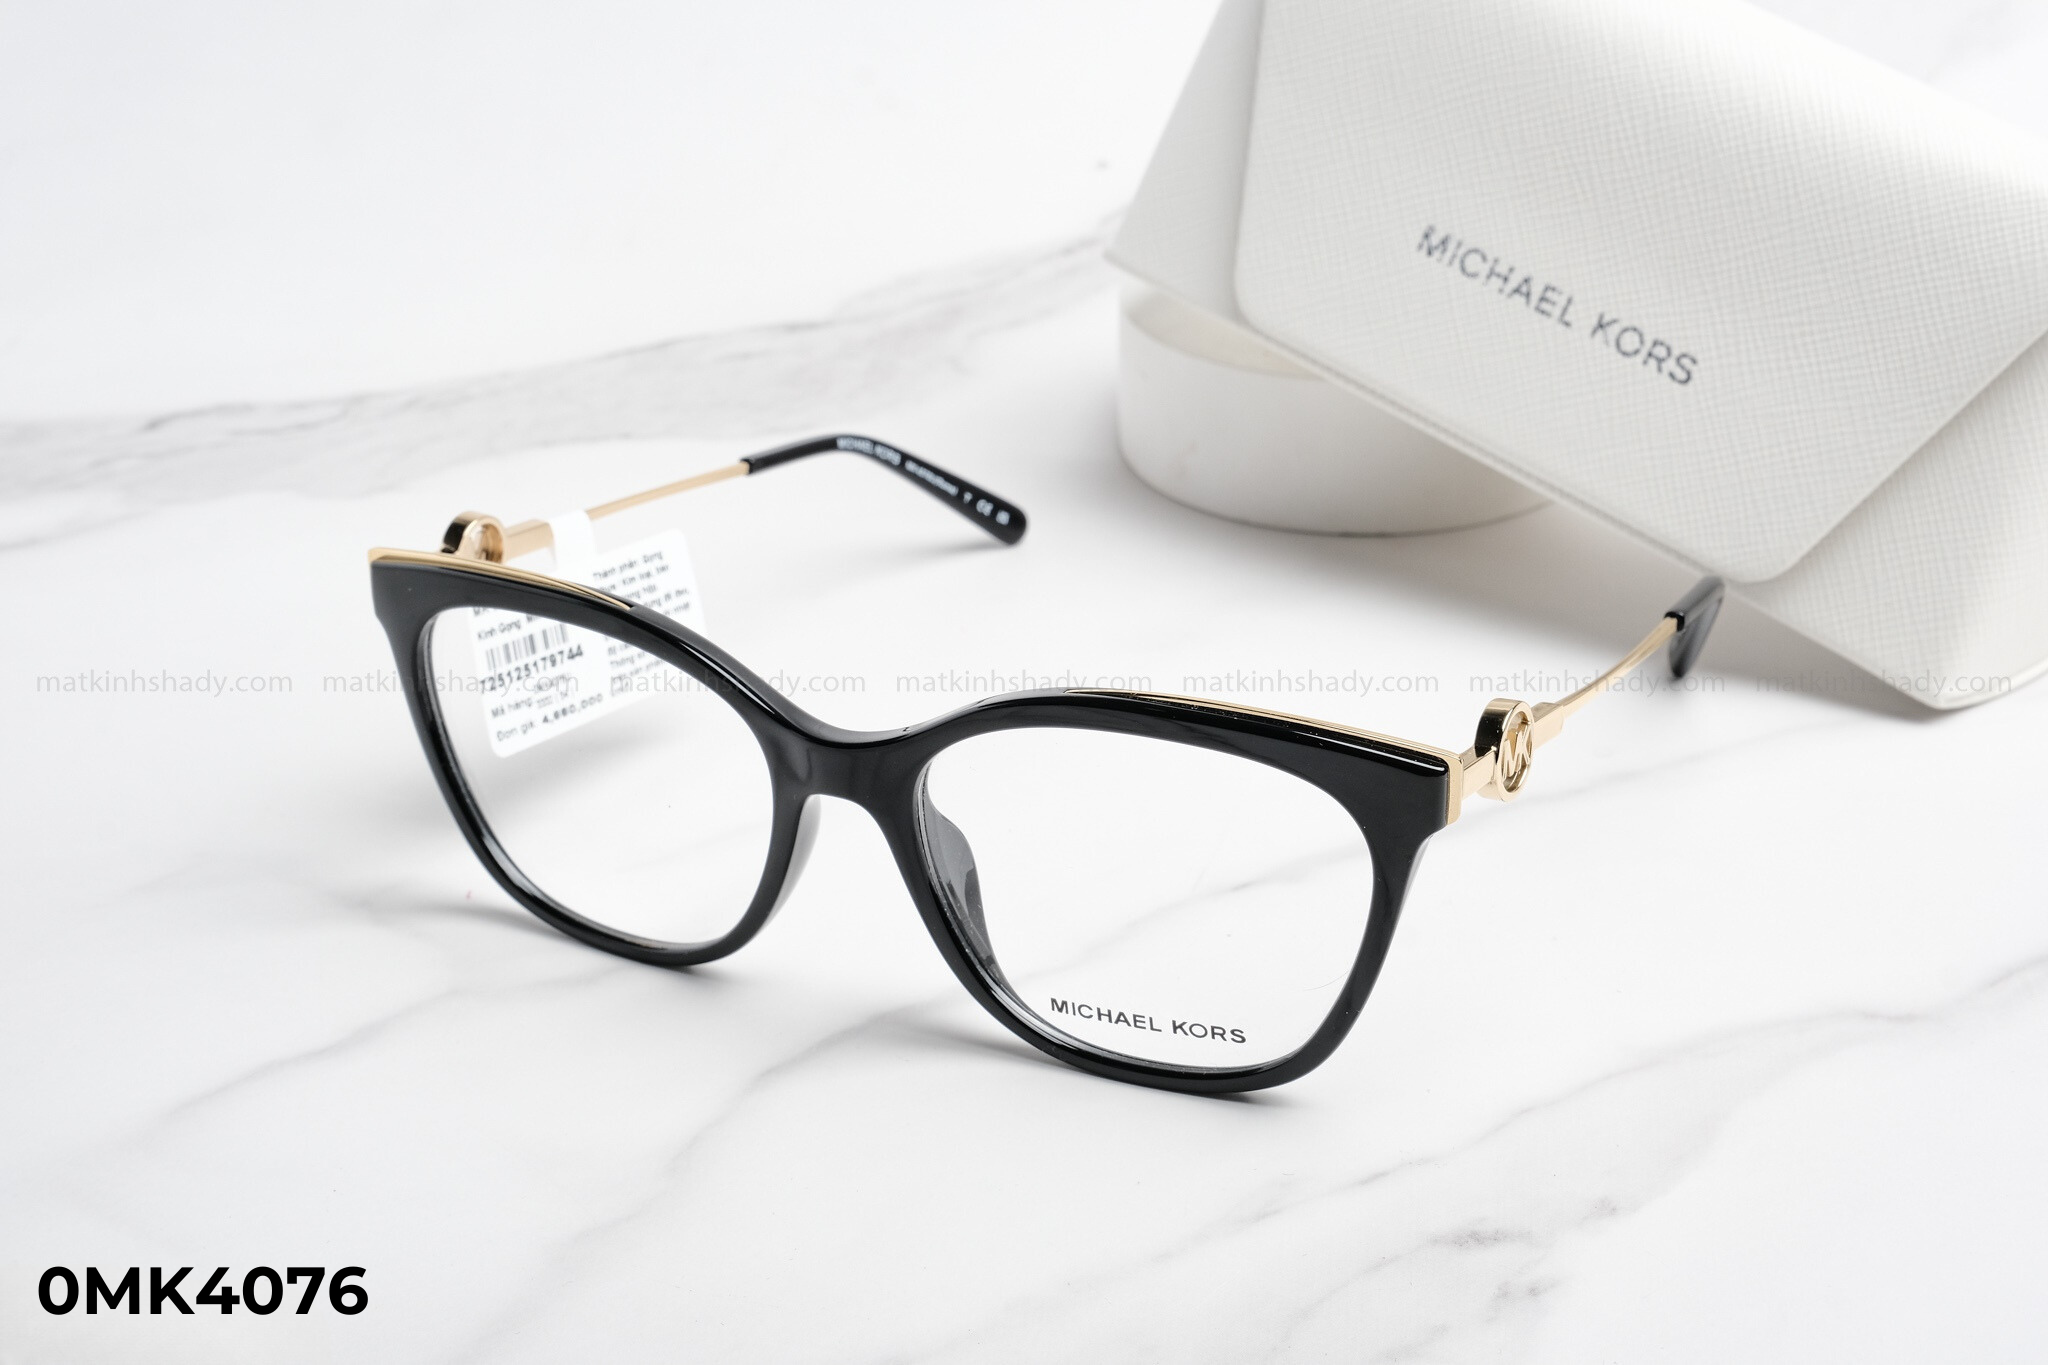  Michael Kors Eyewear - Glasses - 0MK4076 